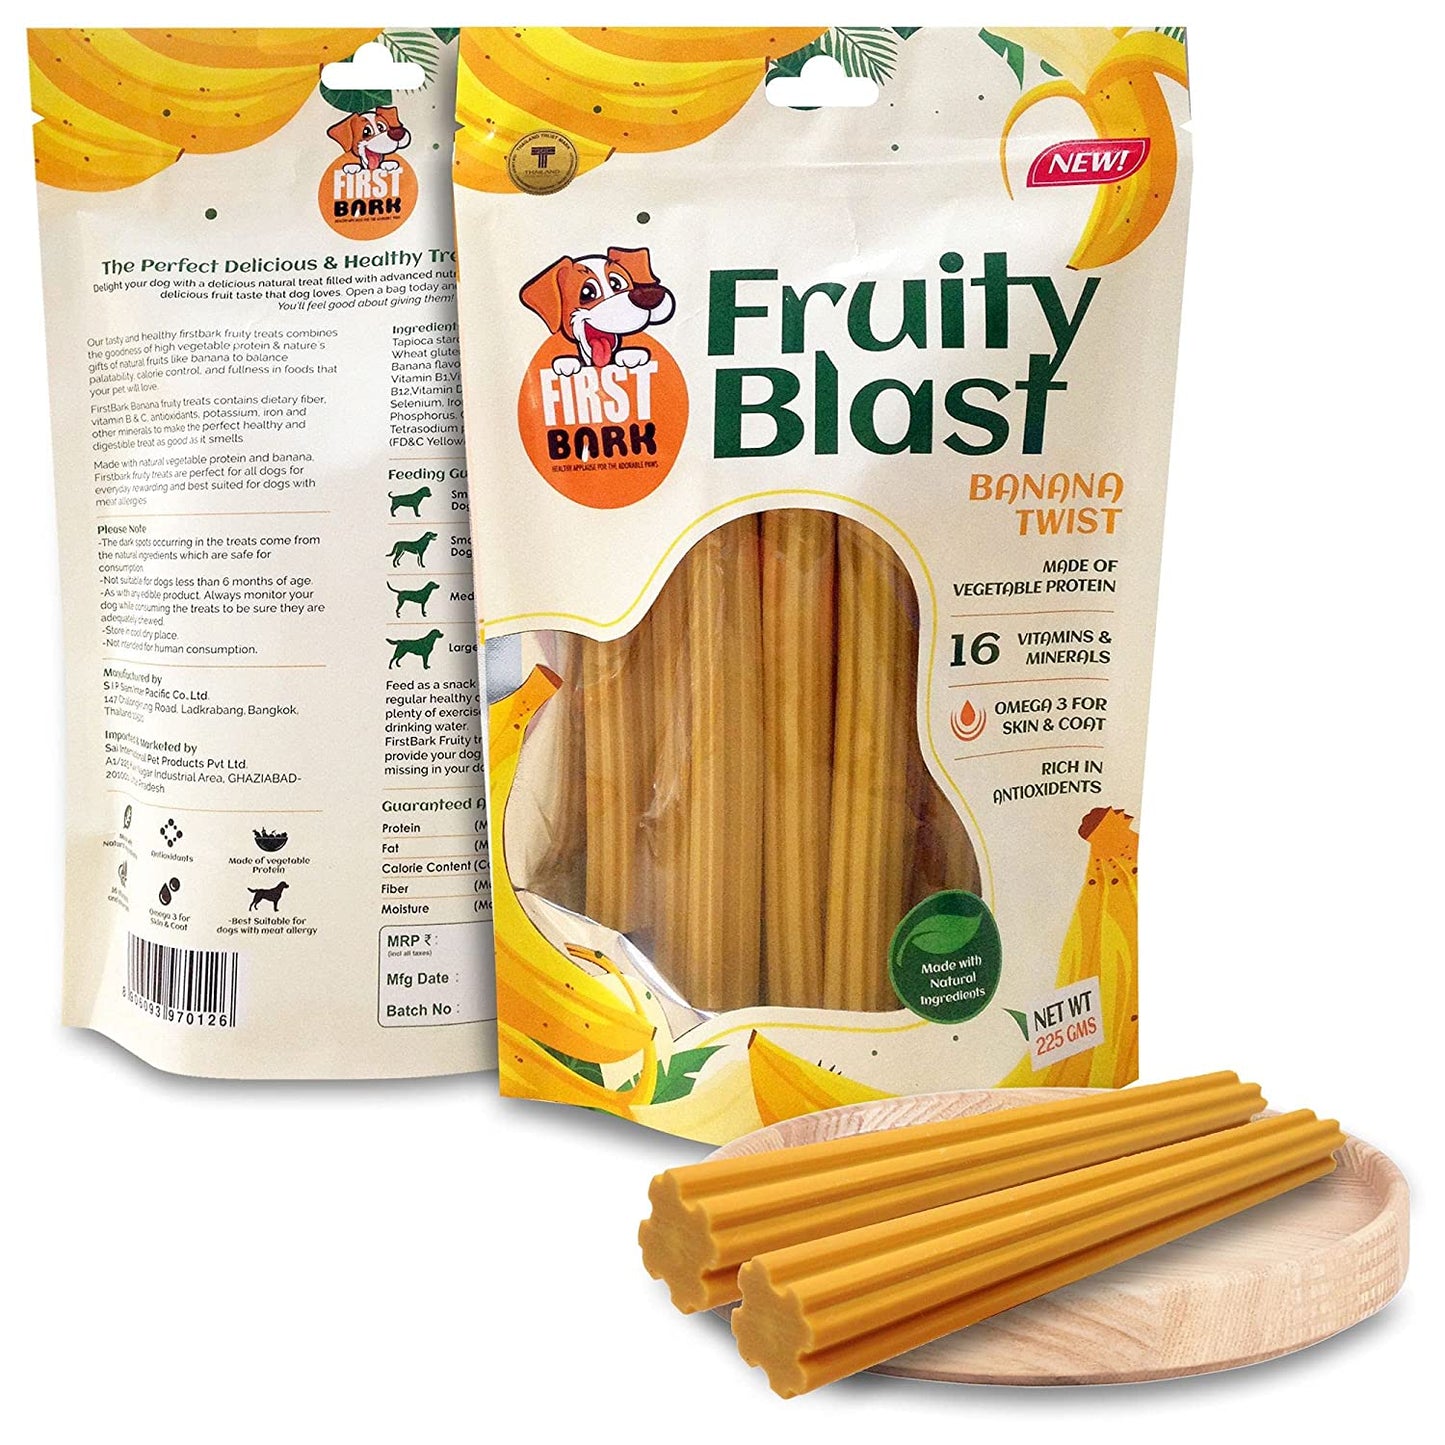 First Bark Fruity Blast Banana Twist - 225 gms